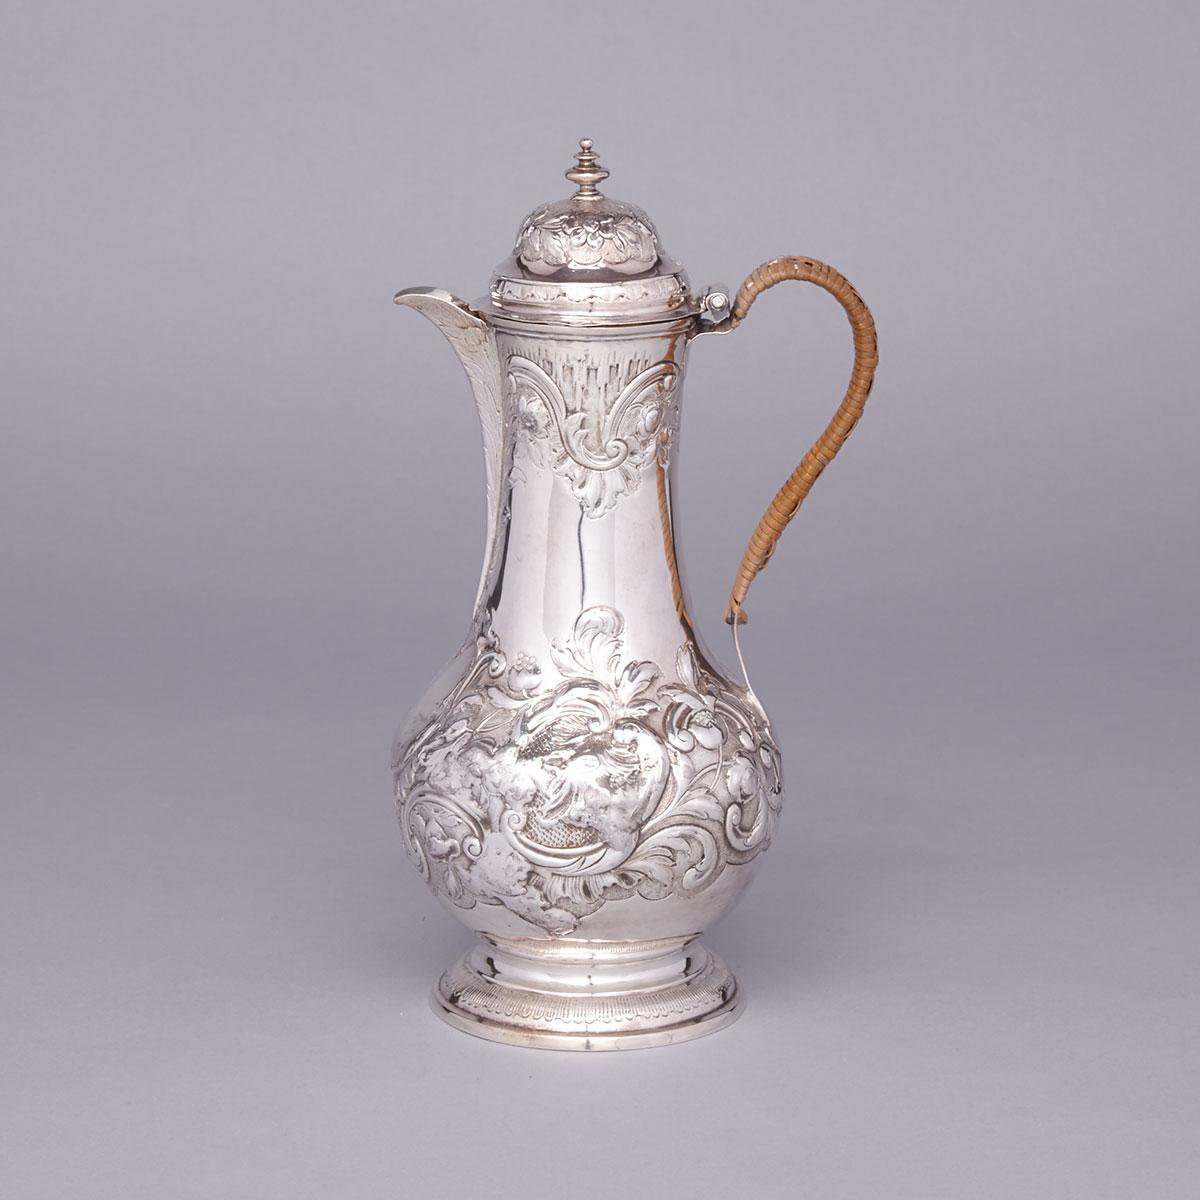 George II Silver Hot Water Pot, Thomas Whipham, London, 1752